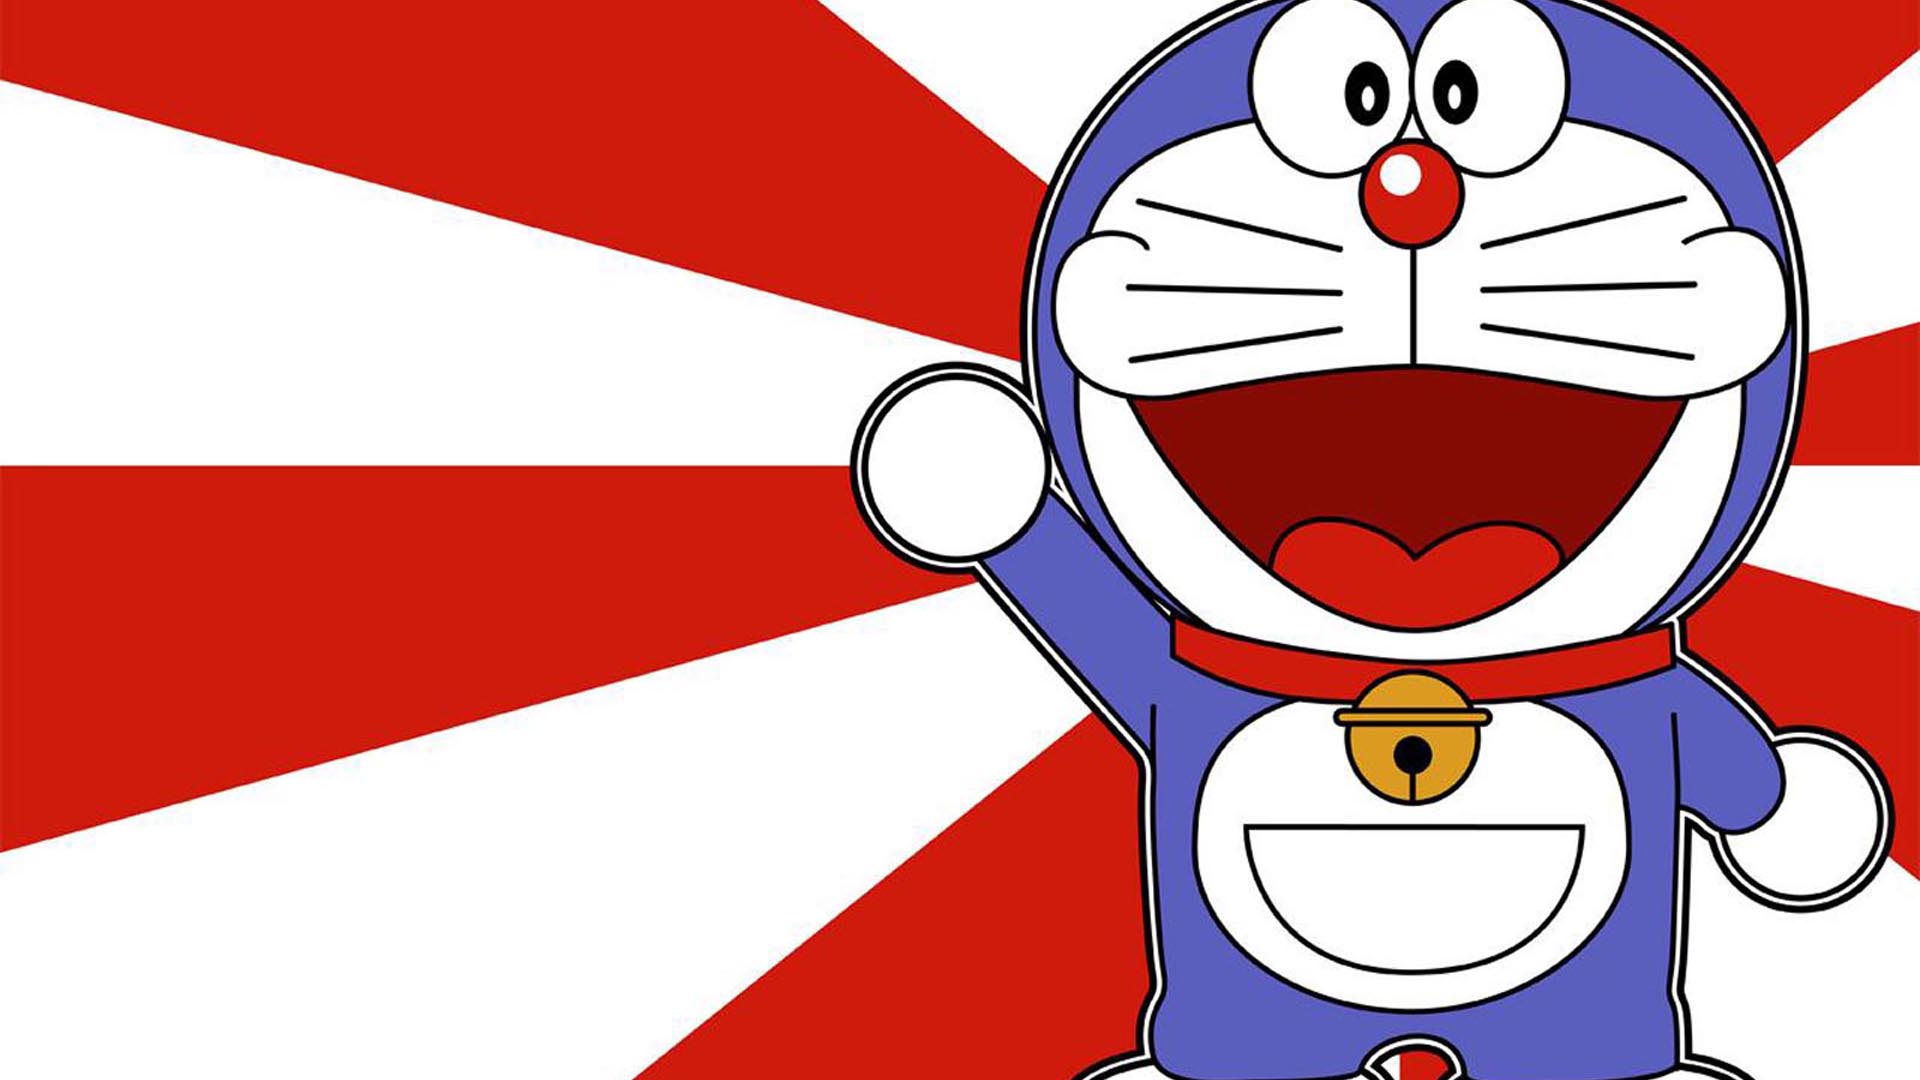 Wallpaper Hd Cartoon Doraemon